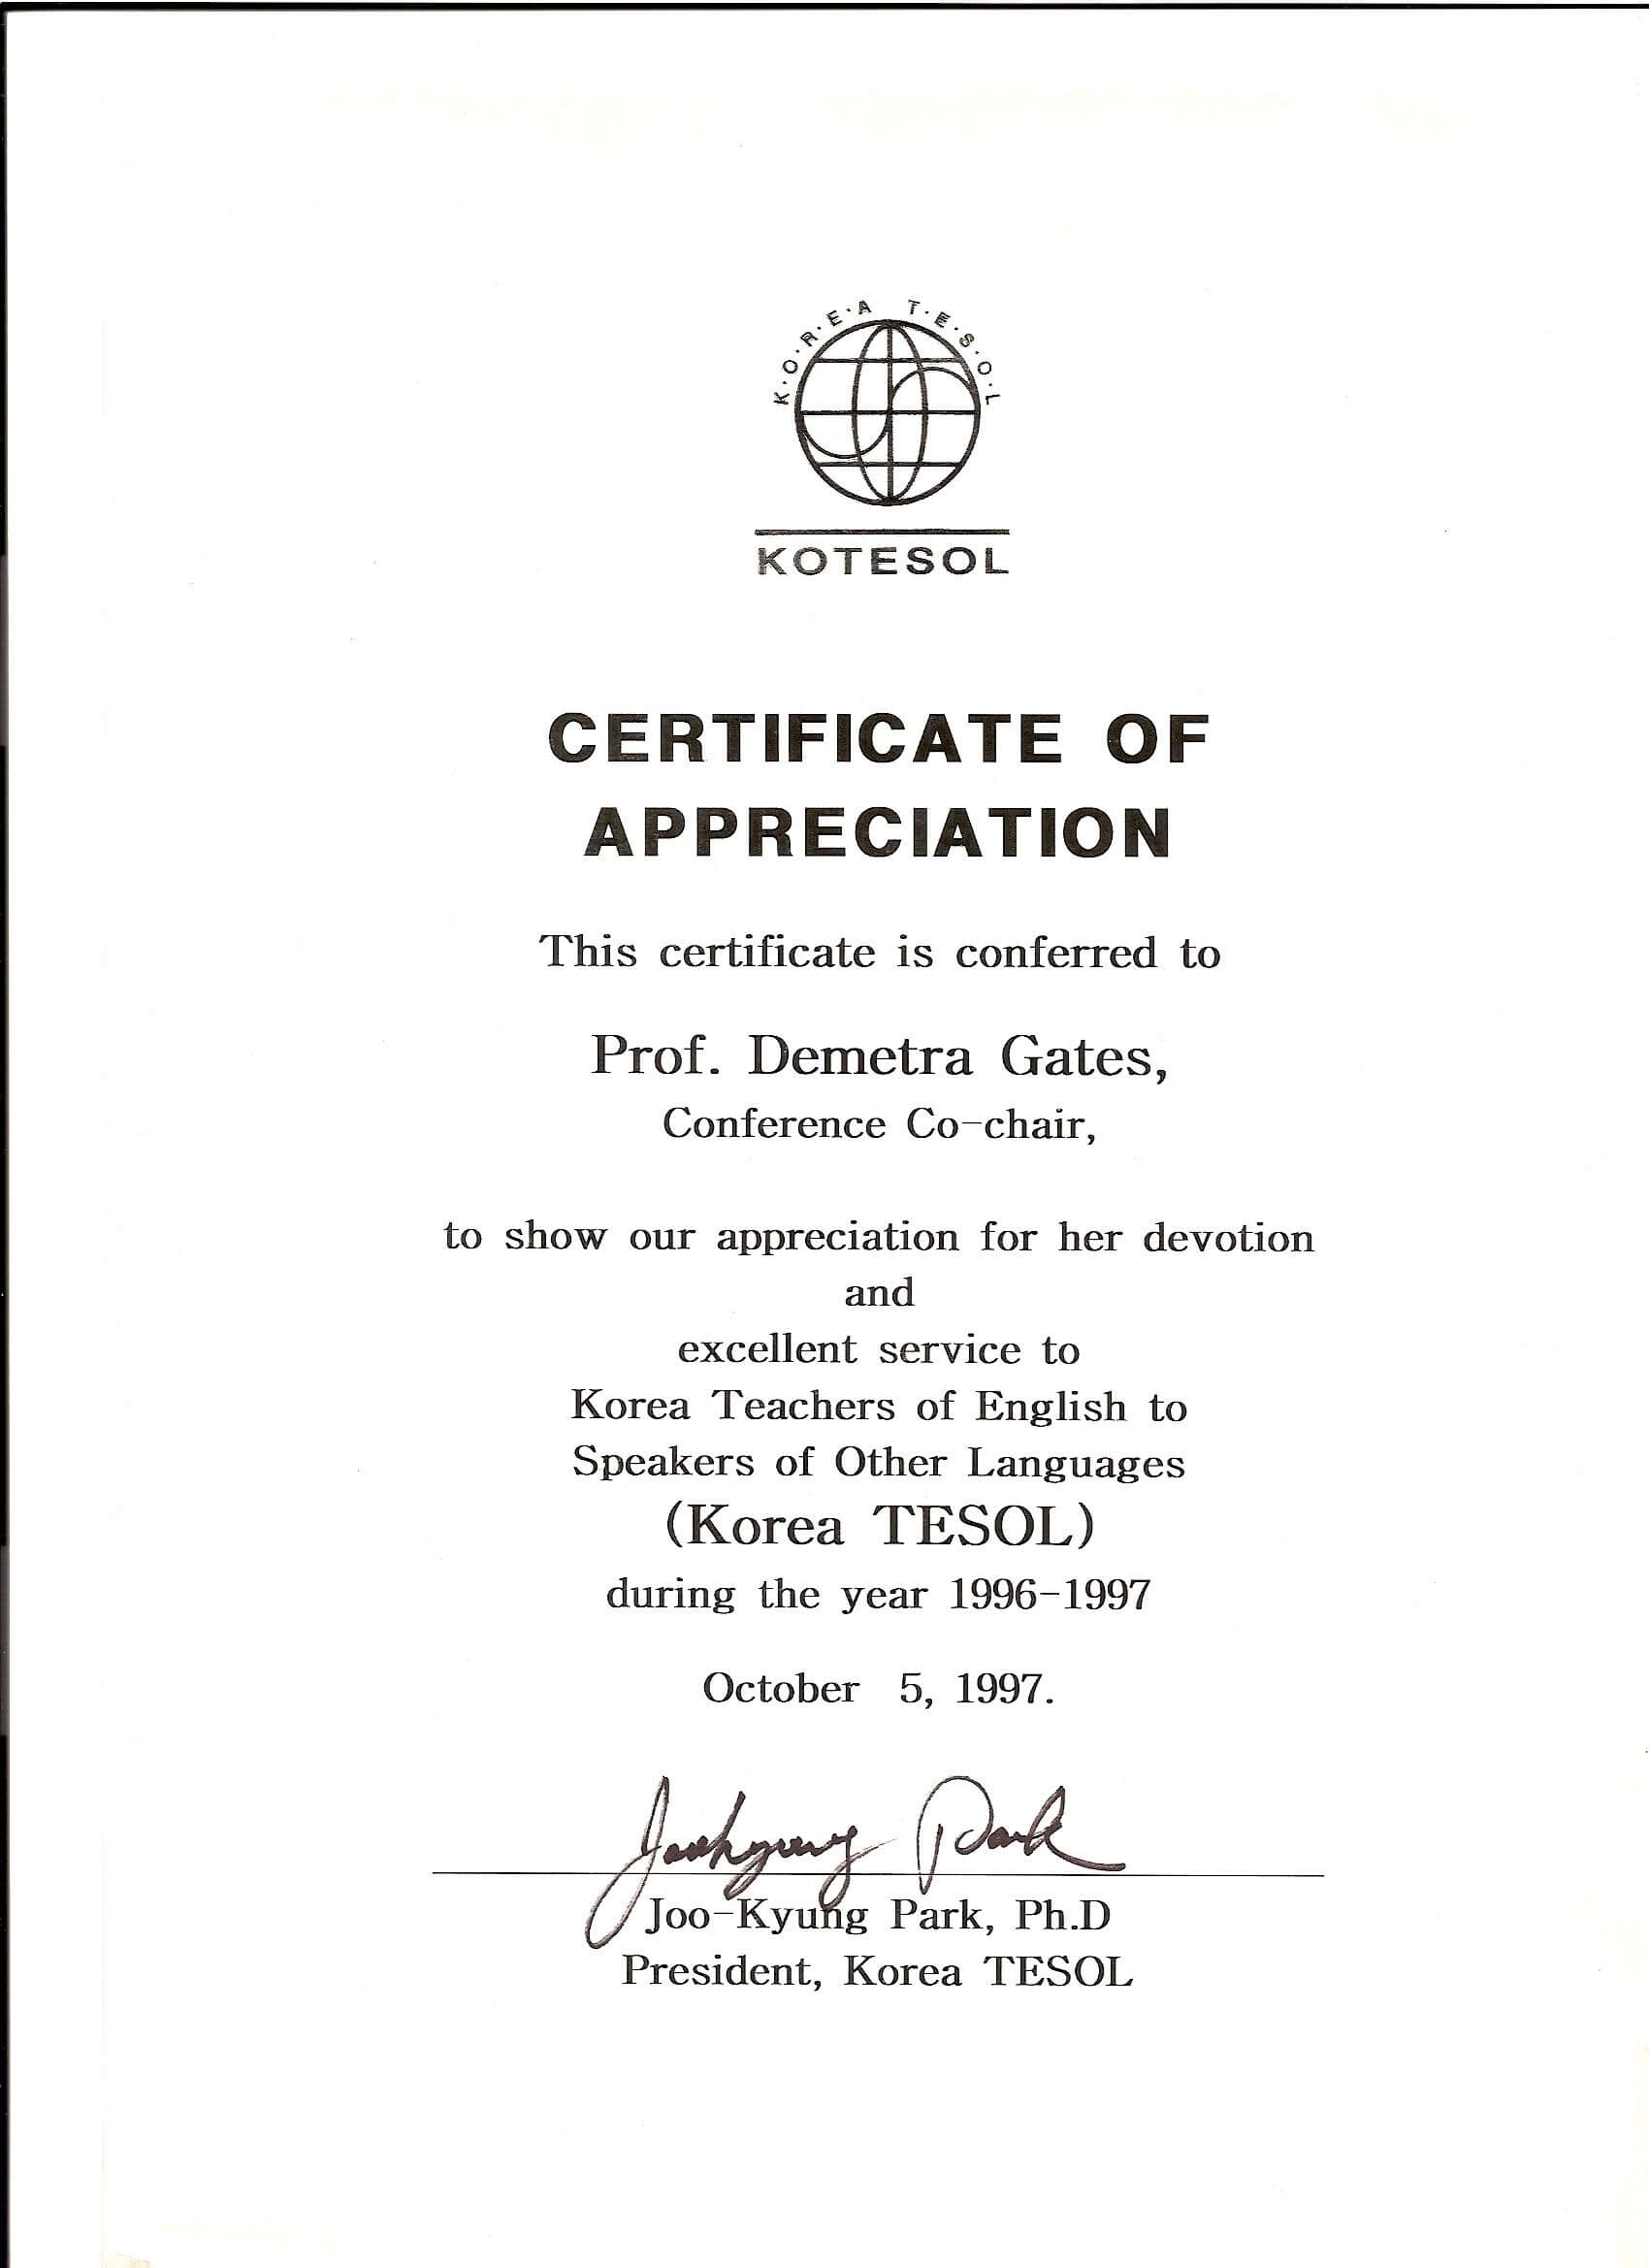 Kotesol Presidential Certificate Of Appreciation (1997 With Regard To Doctorate Certificate Template